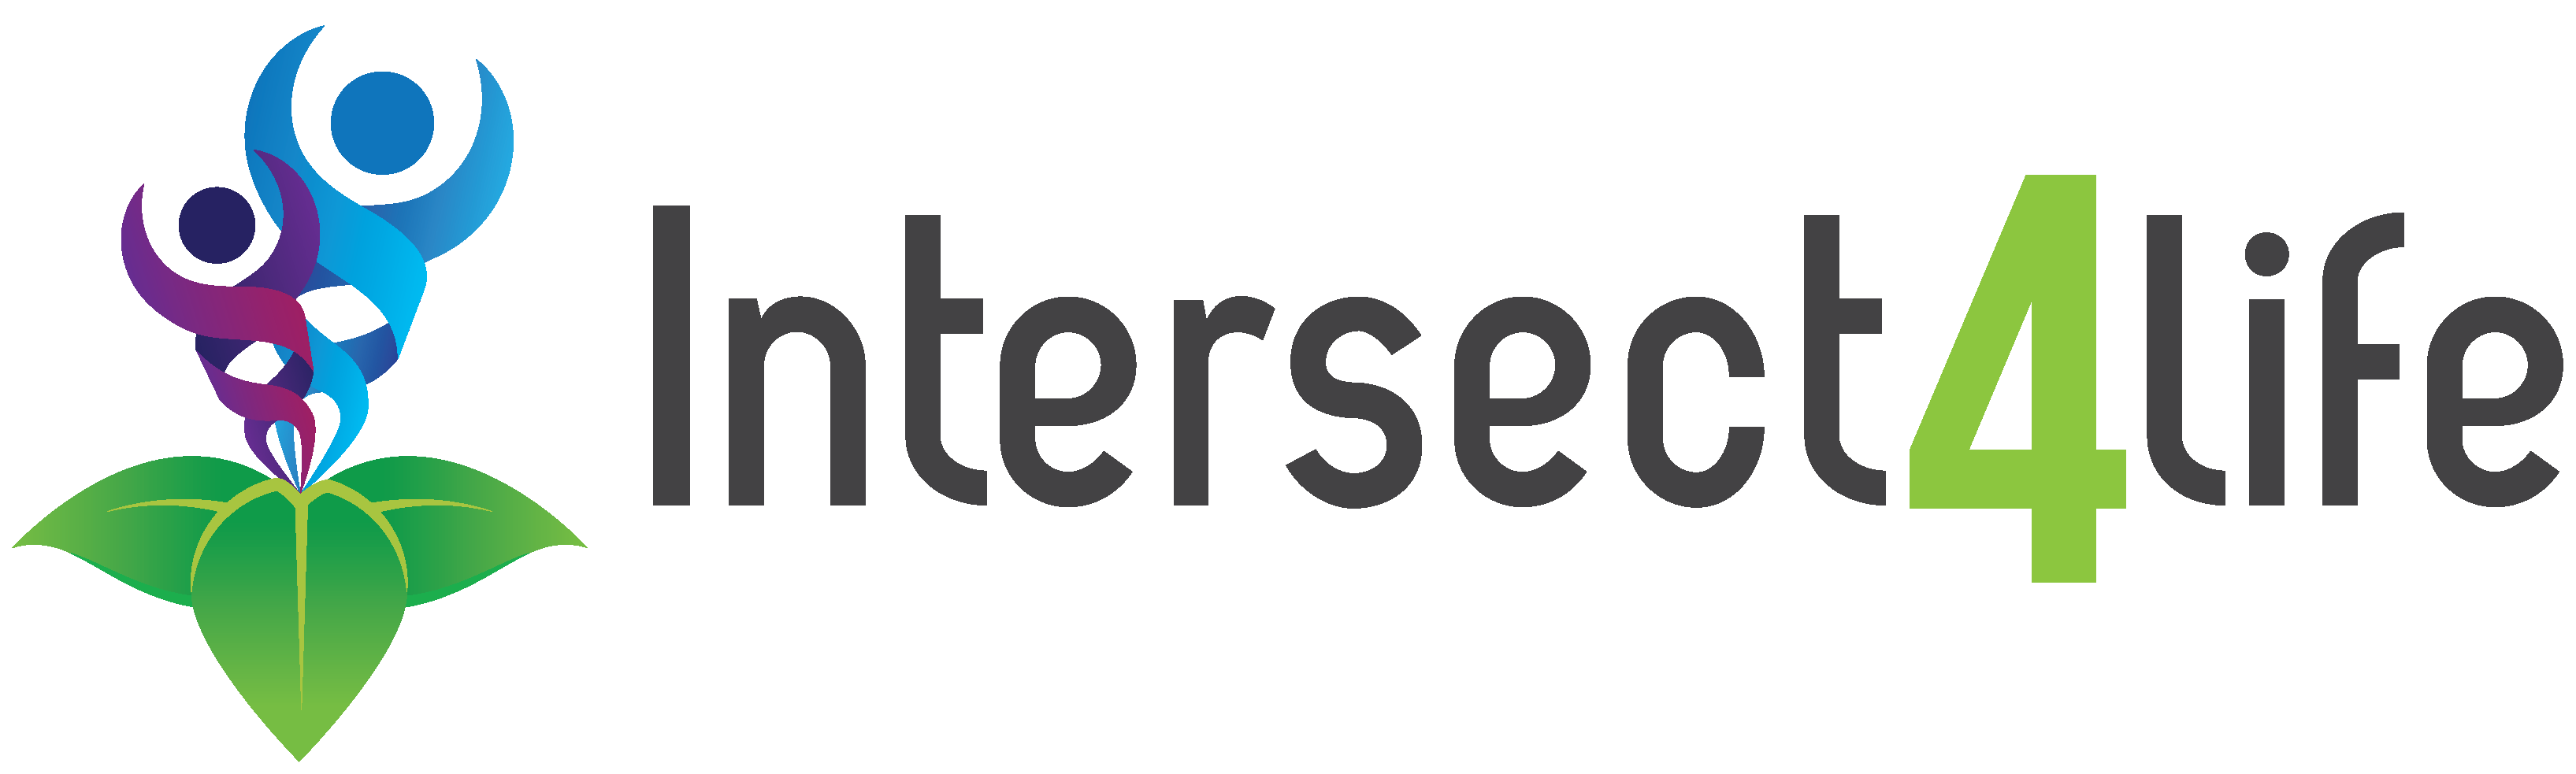 Intersect4Life logo dark 1